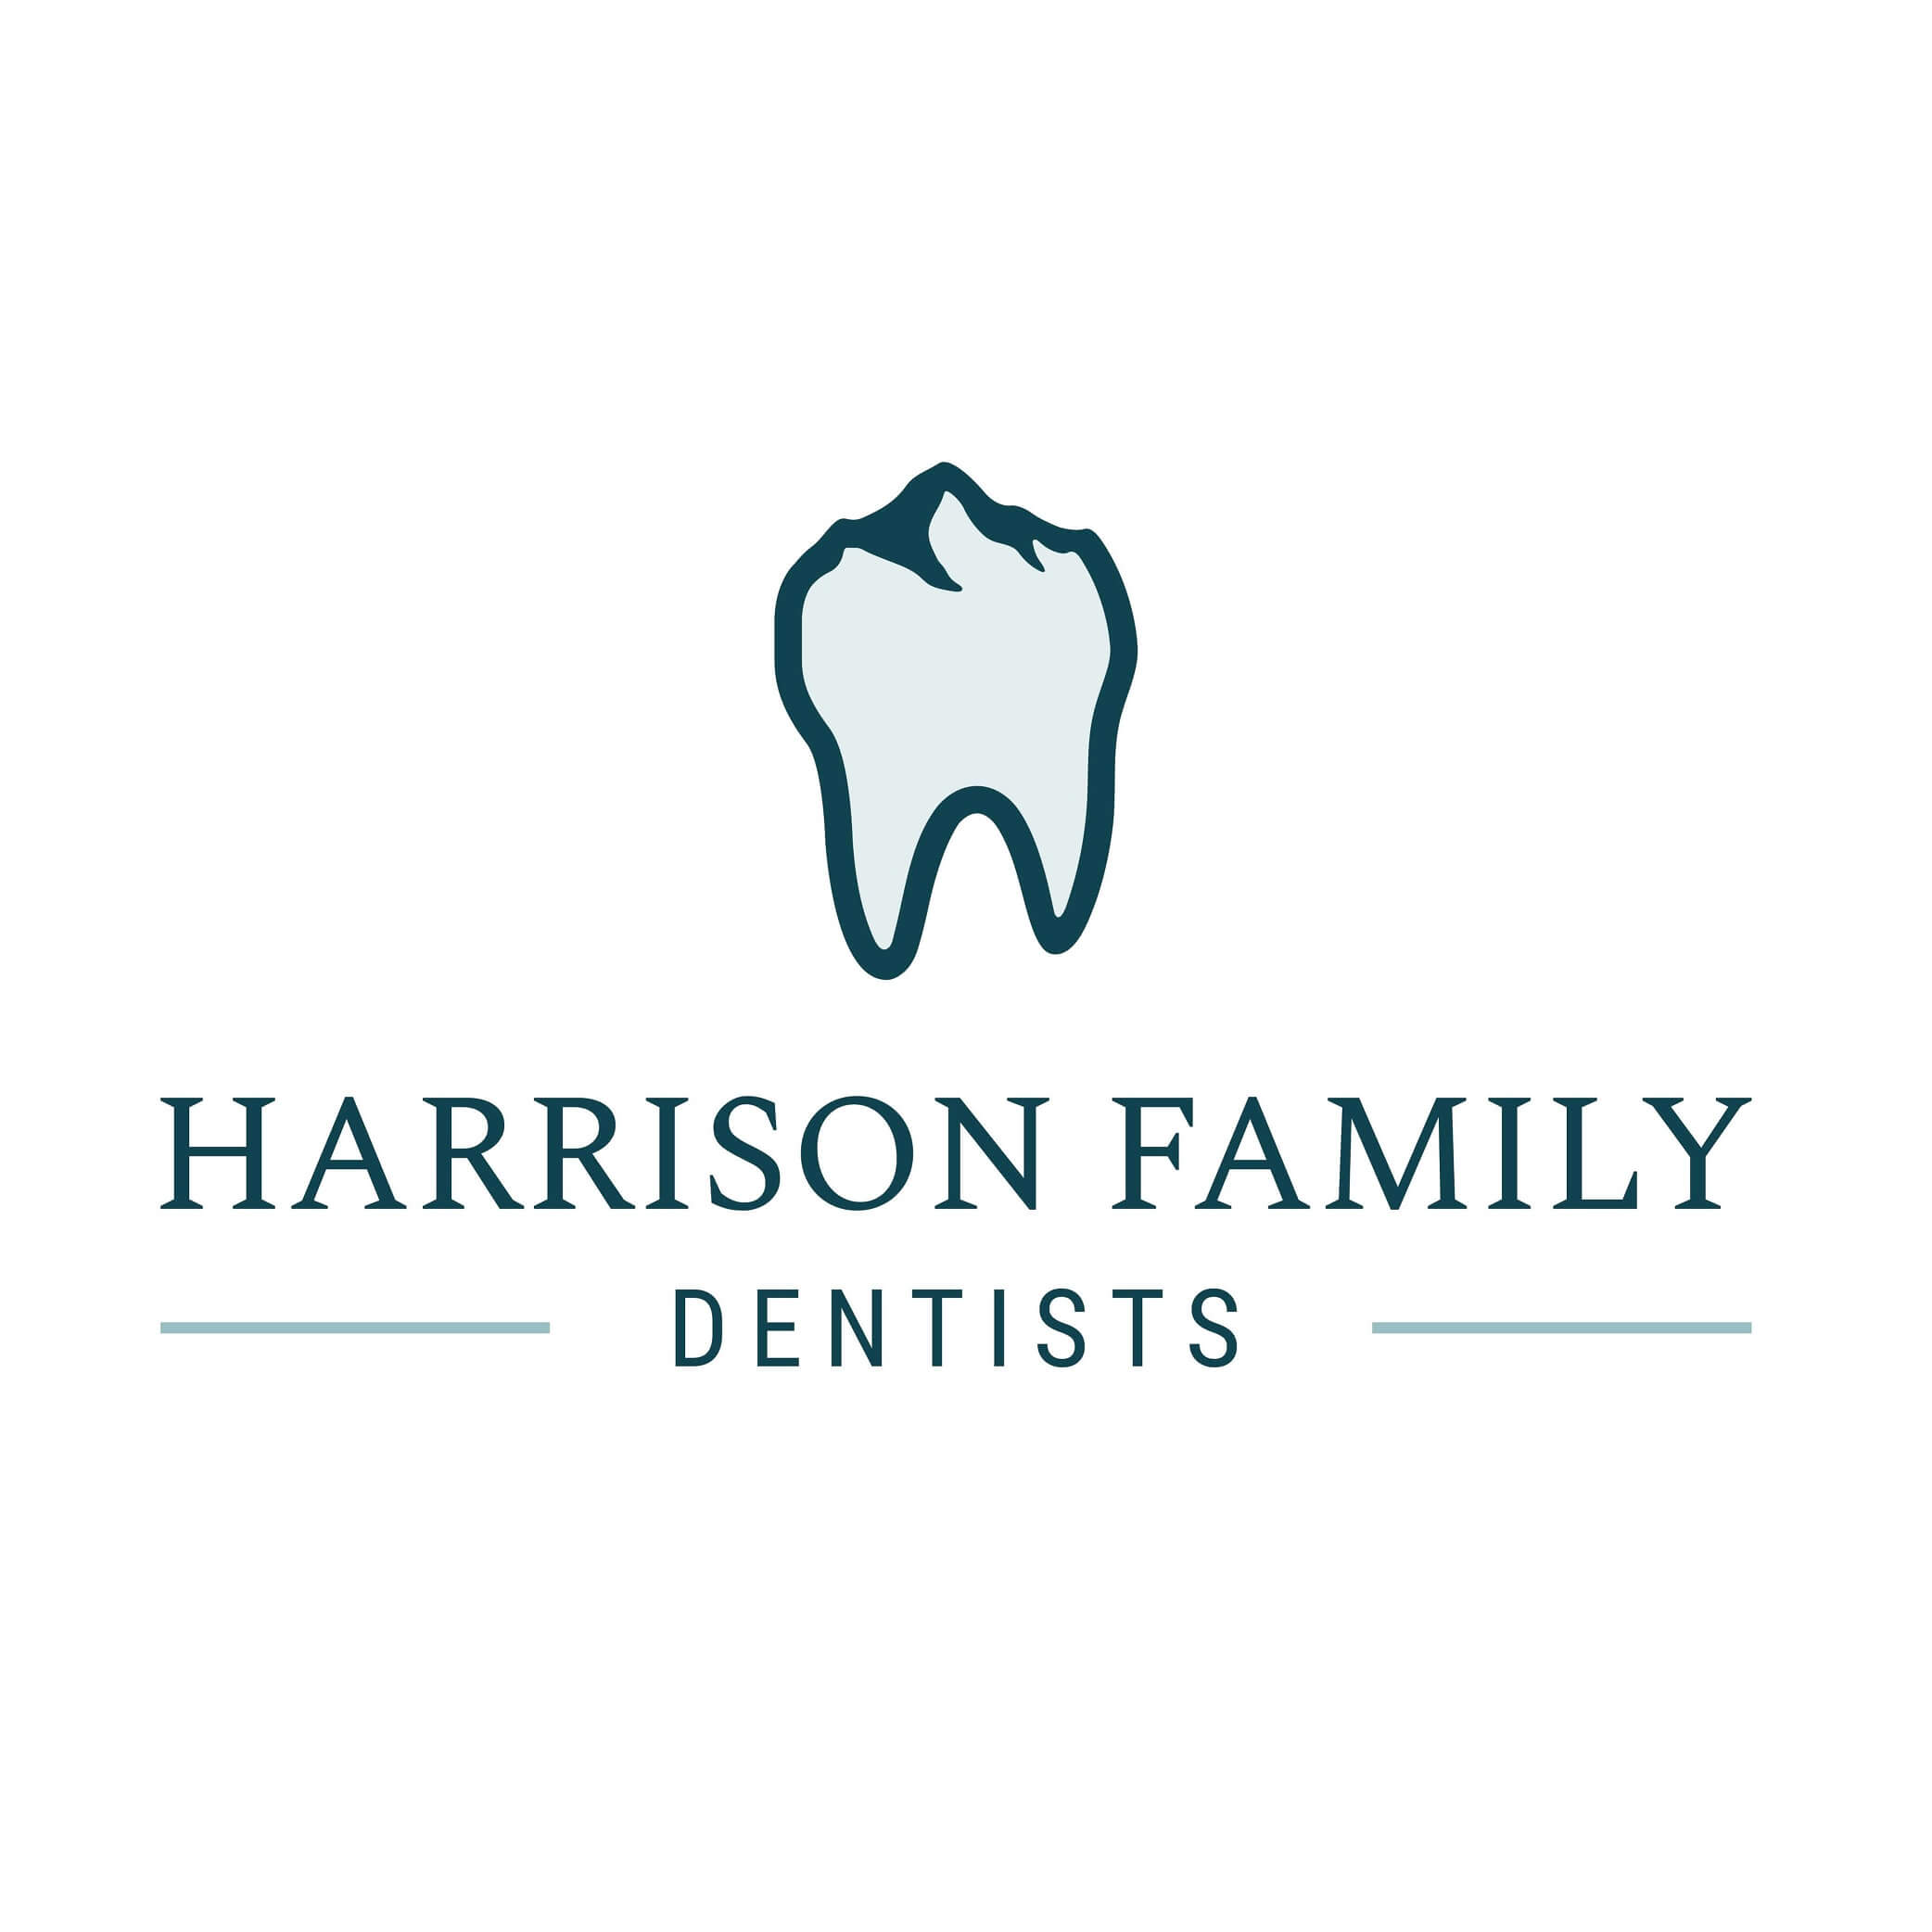 Harrison Family Dentists | Dental clinics | Dentagama